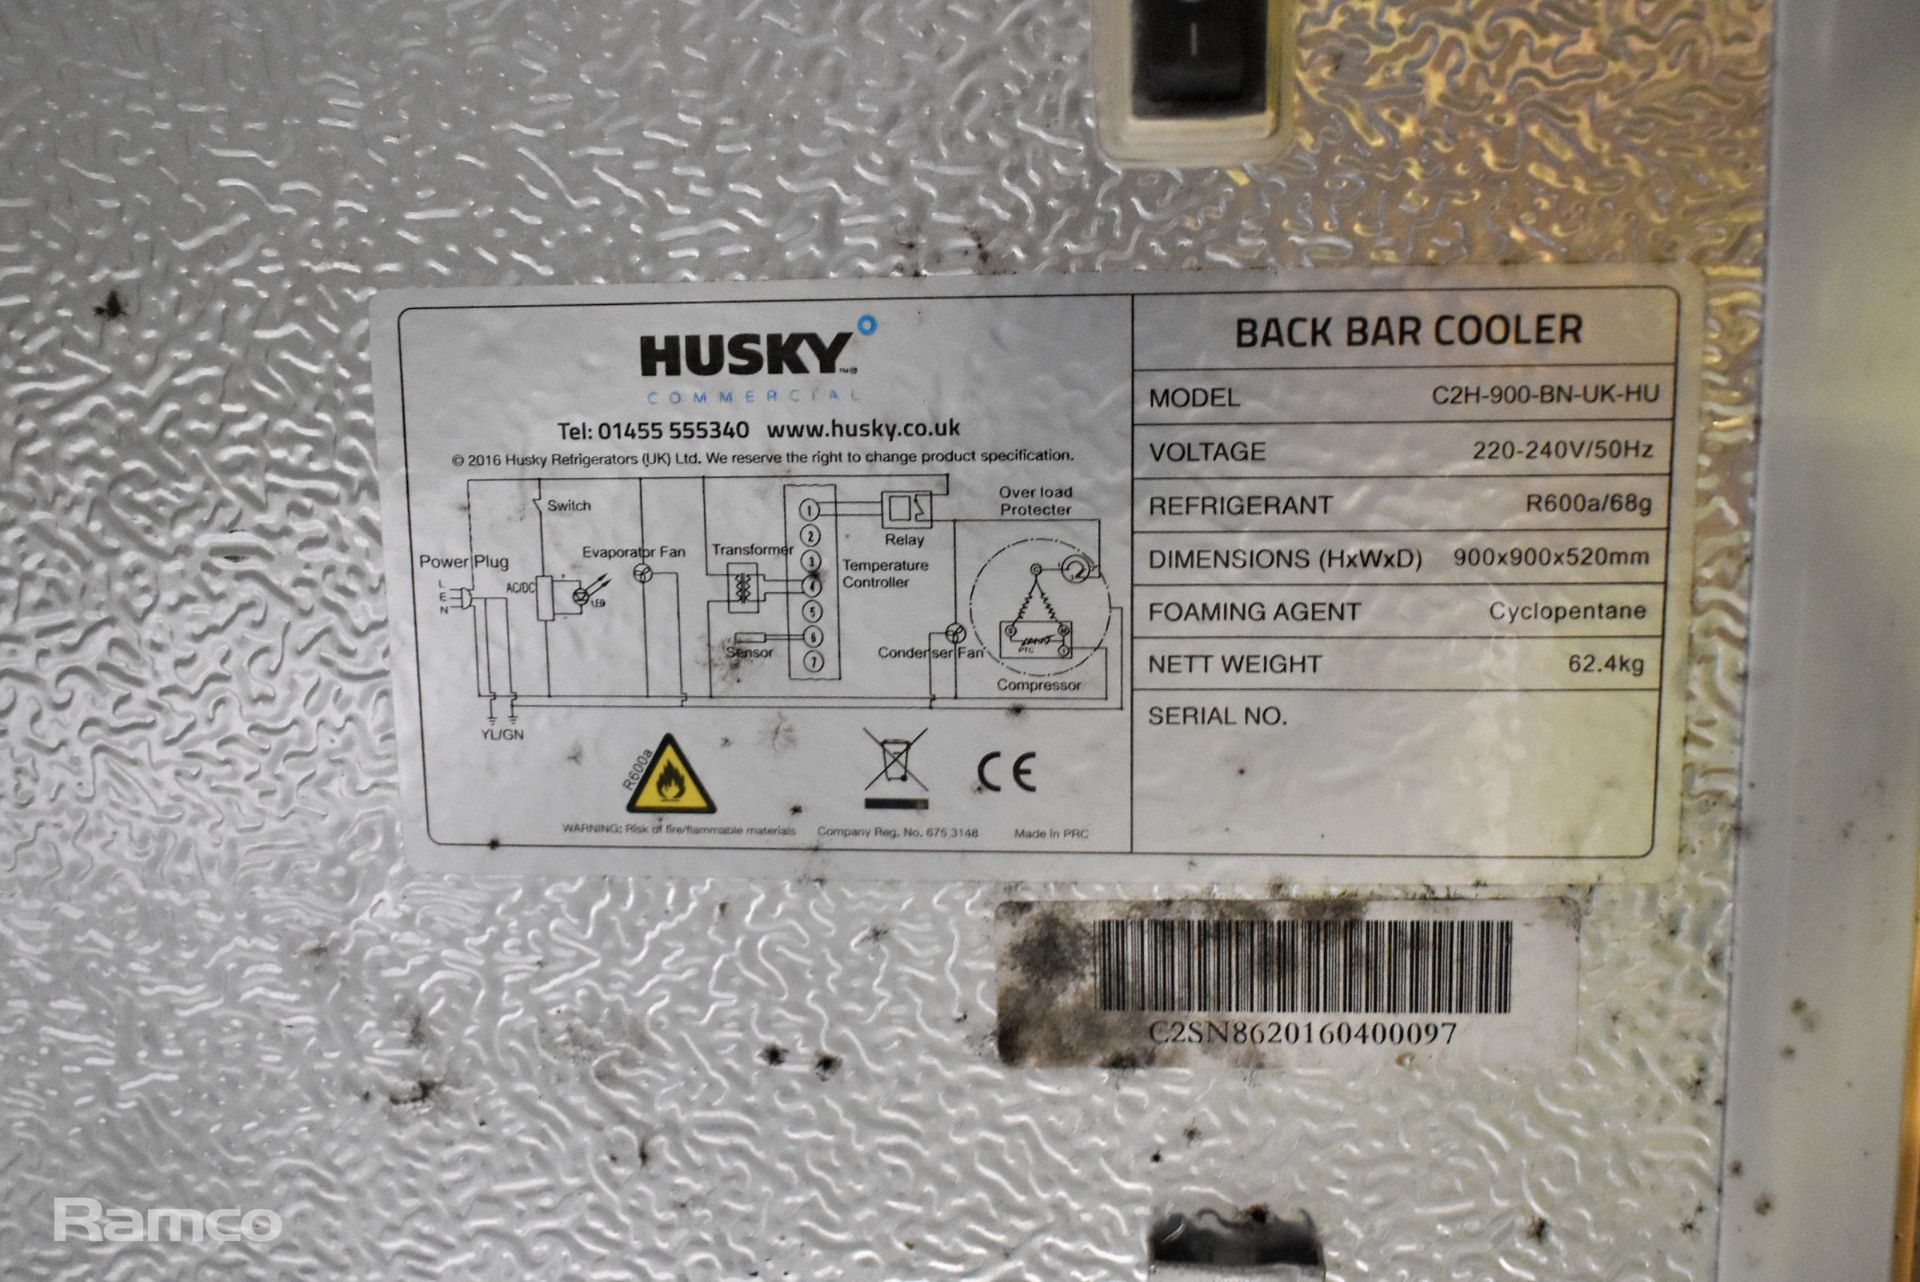 3x Husky C2H-900-BN-UK-HU double door bottle coolers - 2x have missing centrepieces - Image 8 of 12